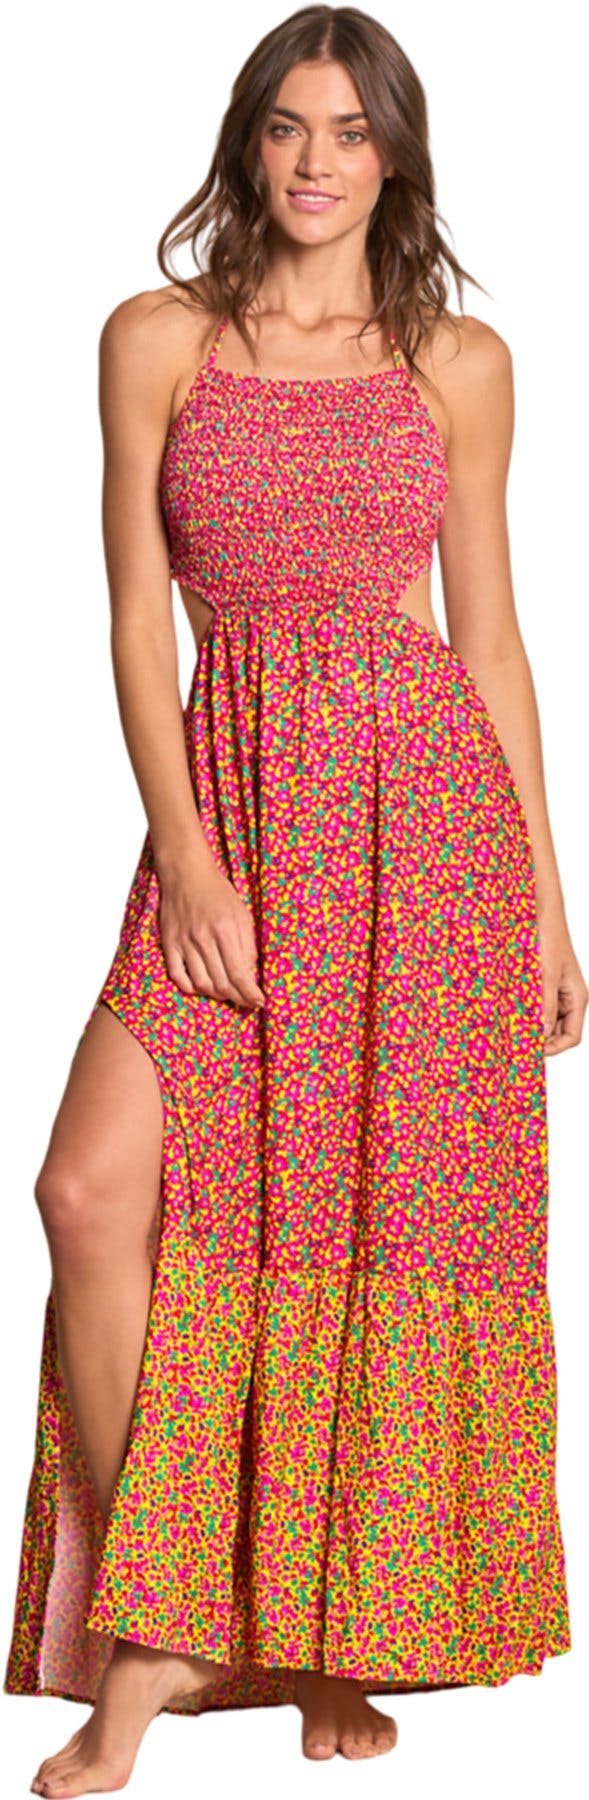 Product image for Vera Miniflore Long Dress - Women's